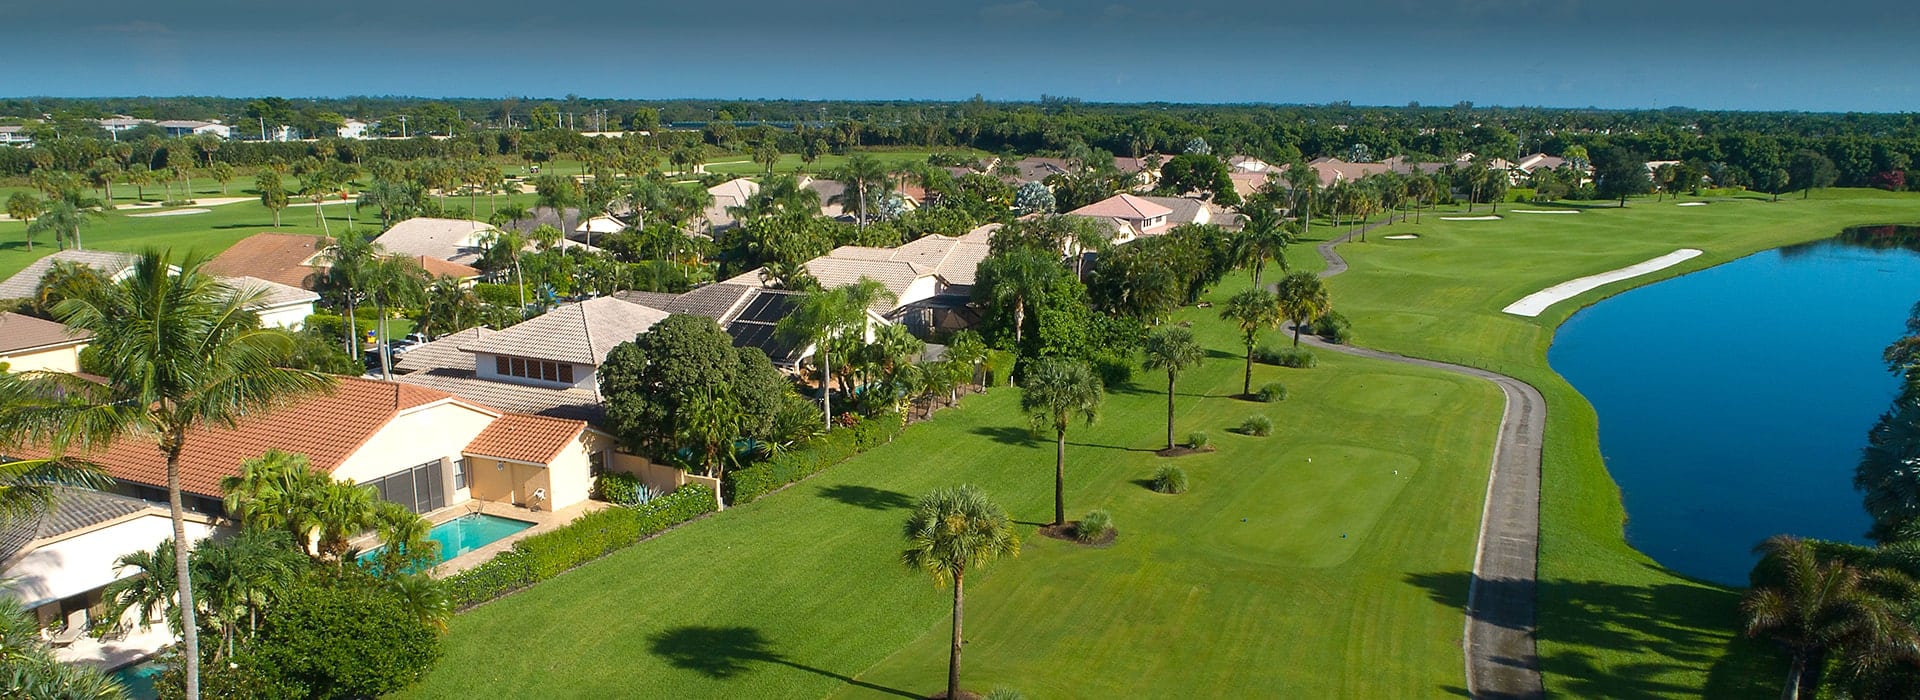 Cedar Glen single-family patio homes with views of Boca West golf course